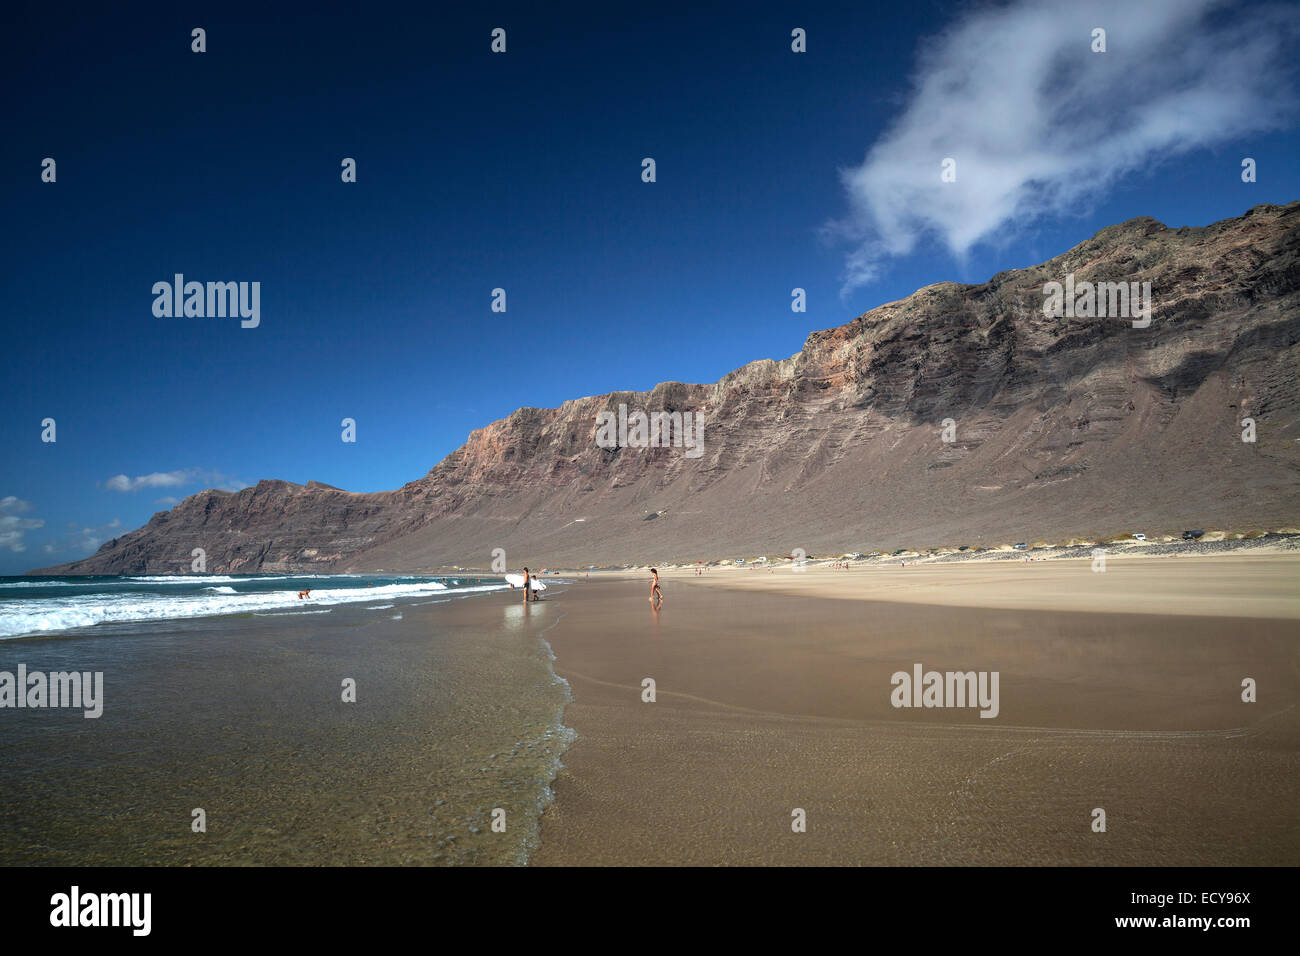 La plage de Famara, Playa de Famara, à Risco de Famara, Lanzarote, îles Canaries, Espagne Banque D'Images